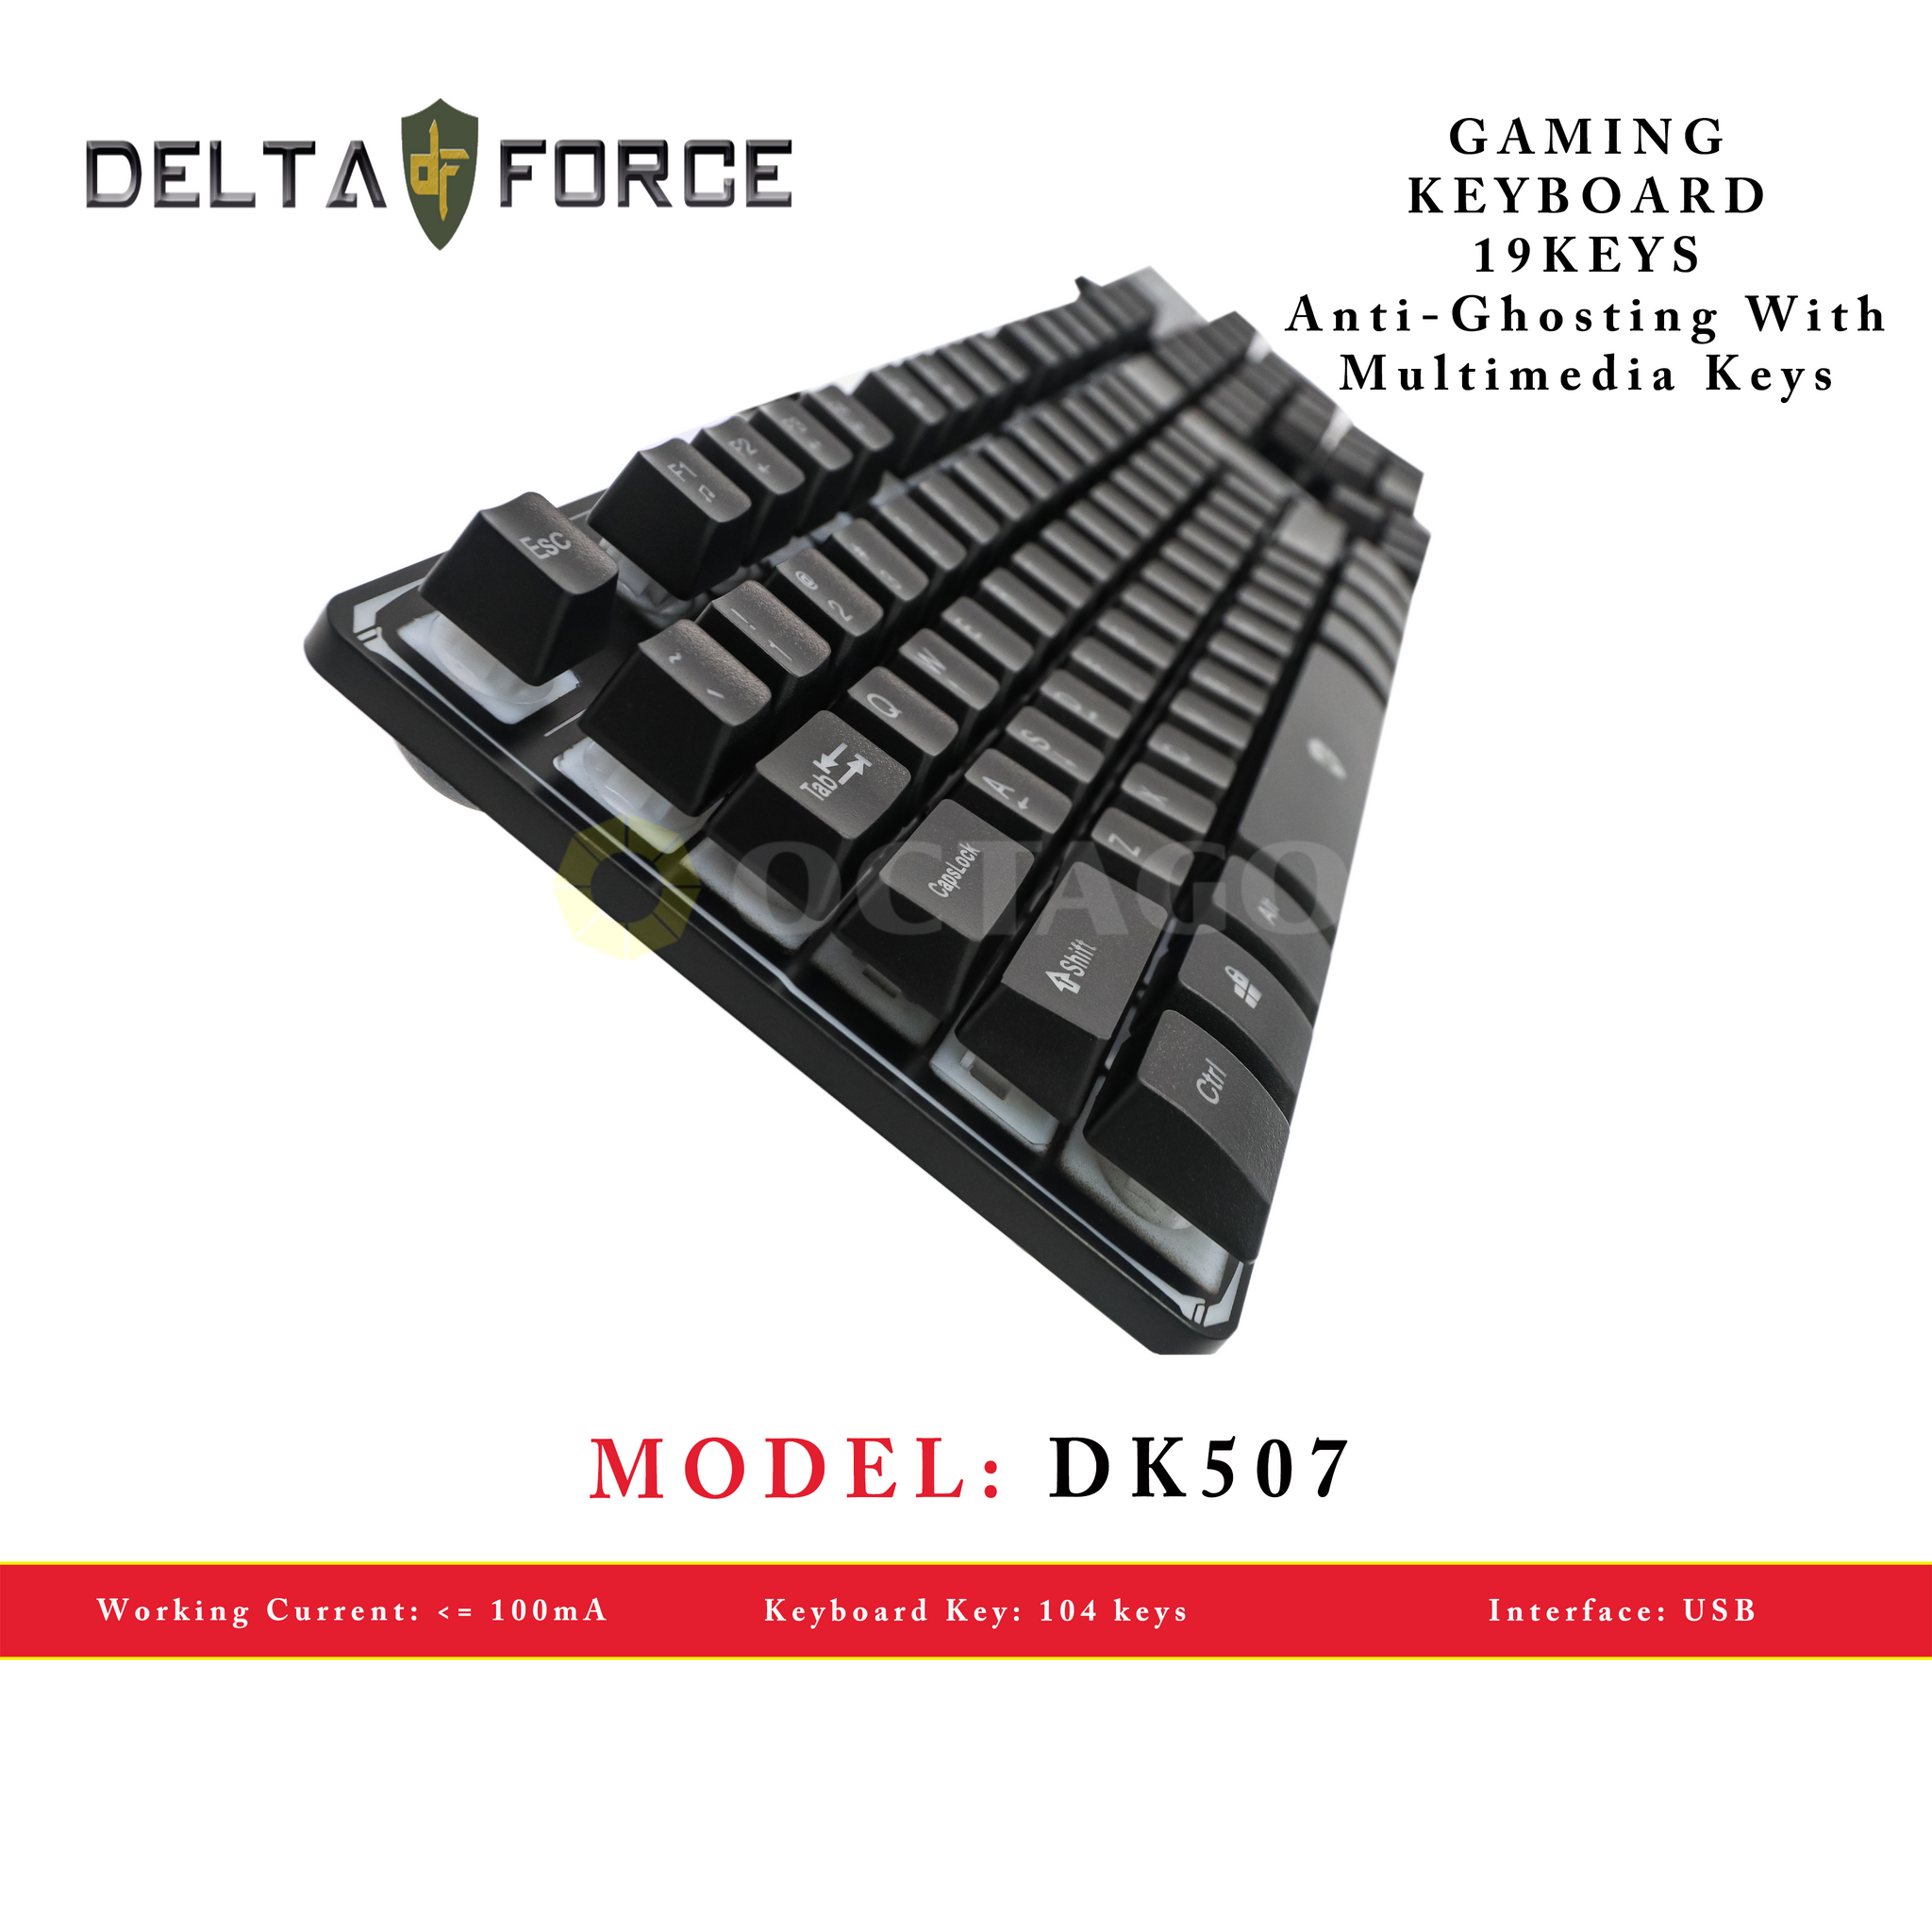 DELTA FORCE DK507 USB GAMING KEYBOARD RAINBOW 19 ANTI-GHOST KEYS DELTA FORCE DK507 USB GAMING KEYBOARD RAINBOW 19 ANTI-GHOST KEYS